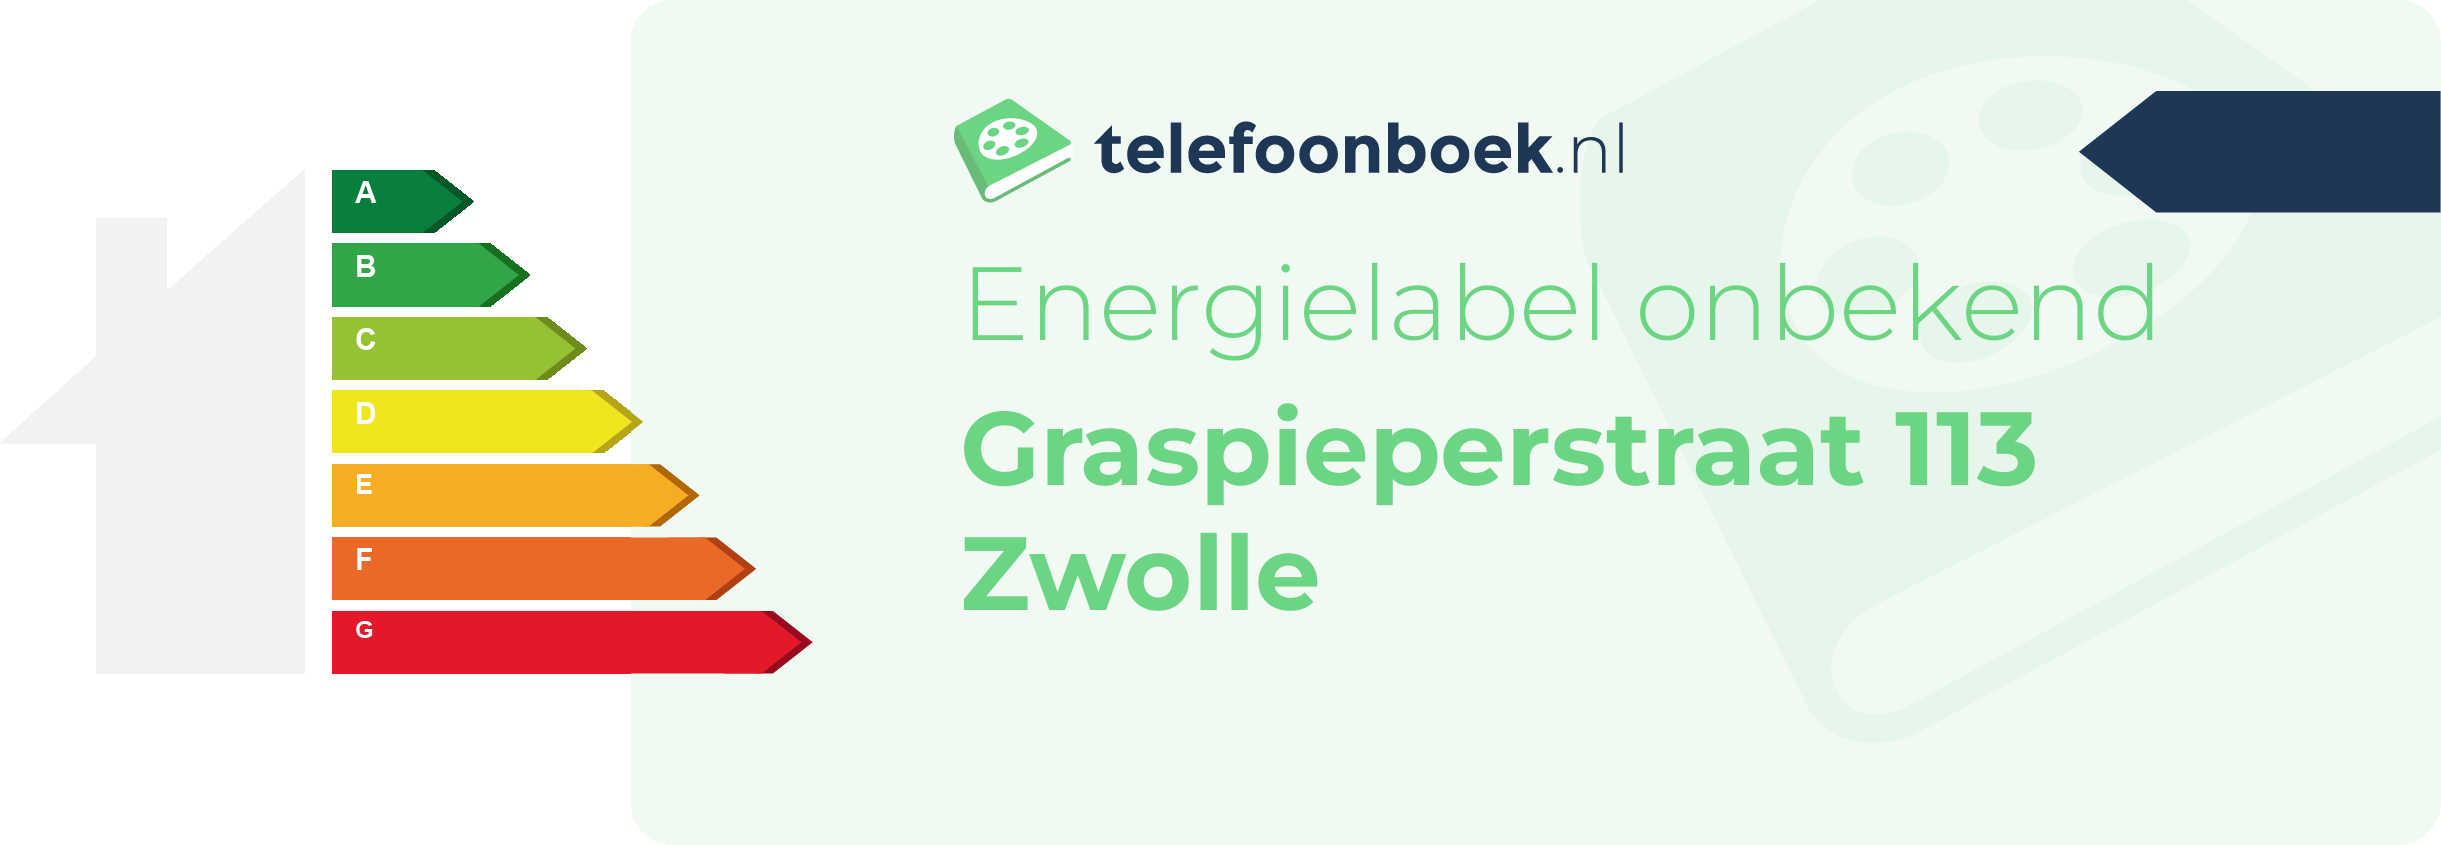 Energielabel Graspieperstraat 113 Zwolle